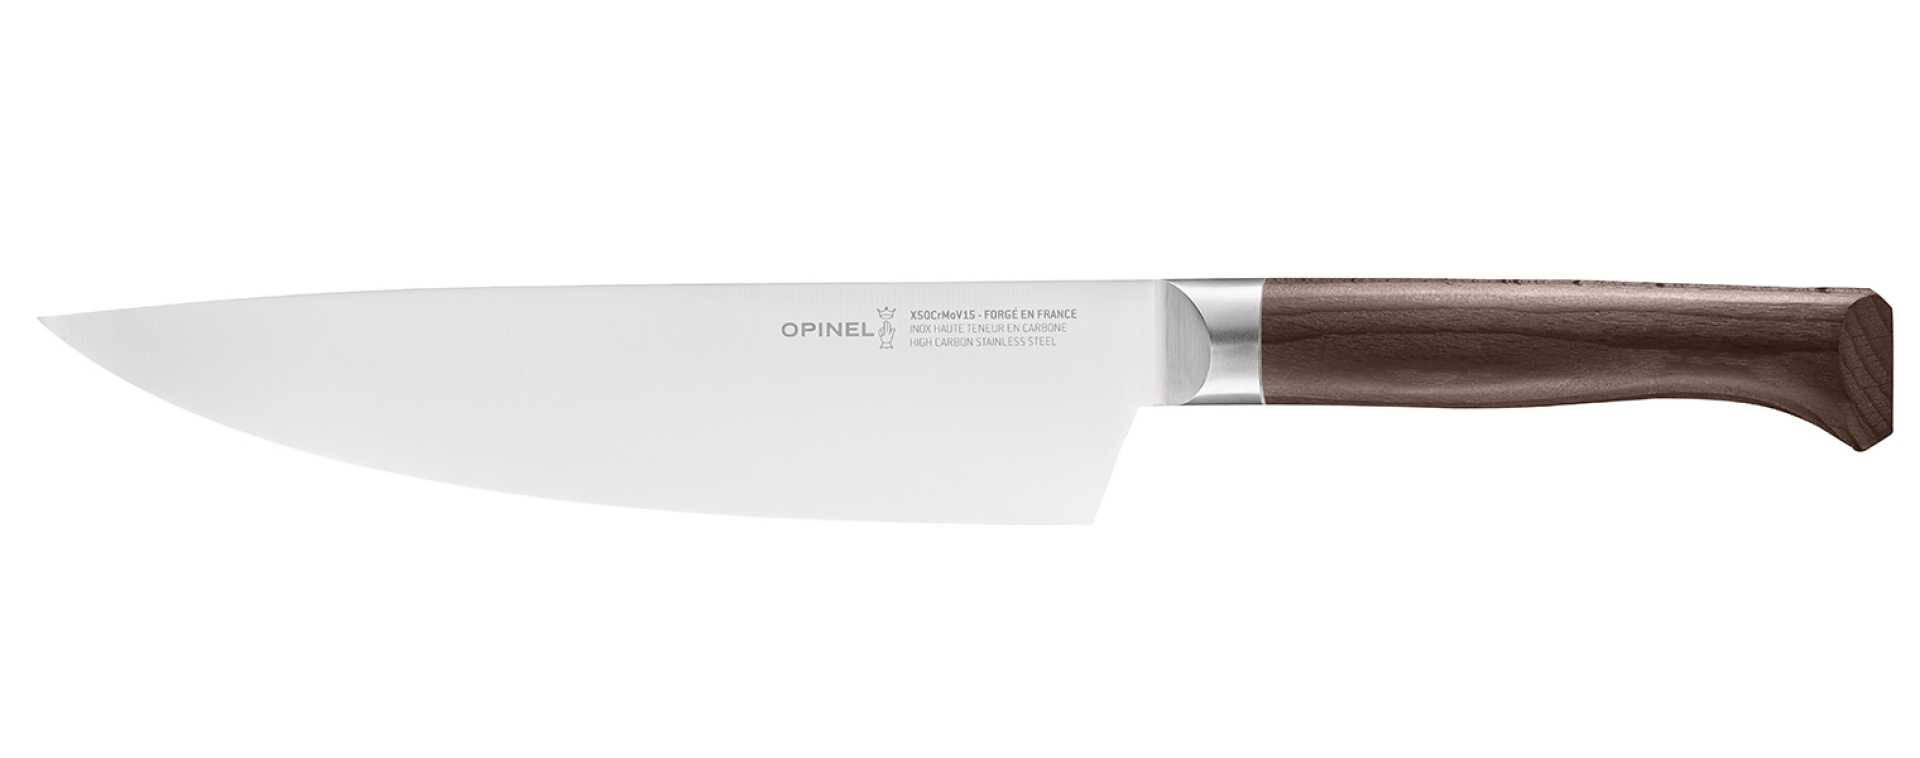 Avis : Couteaux de cuisine Opinel - ForgeOrigine